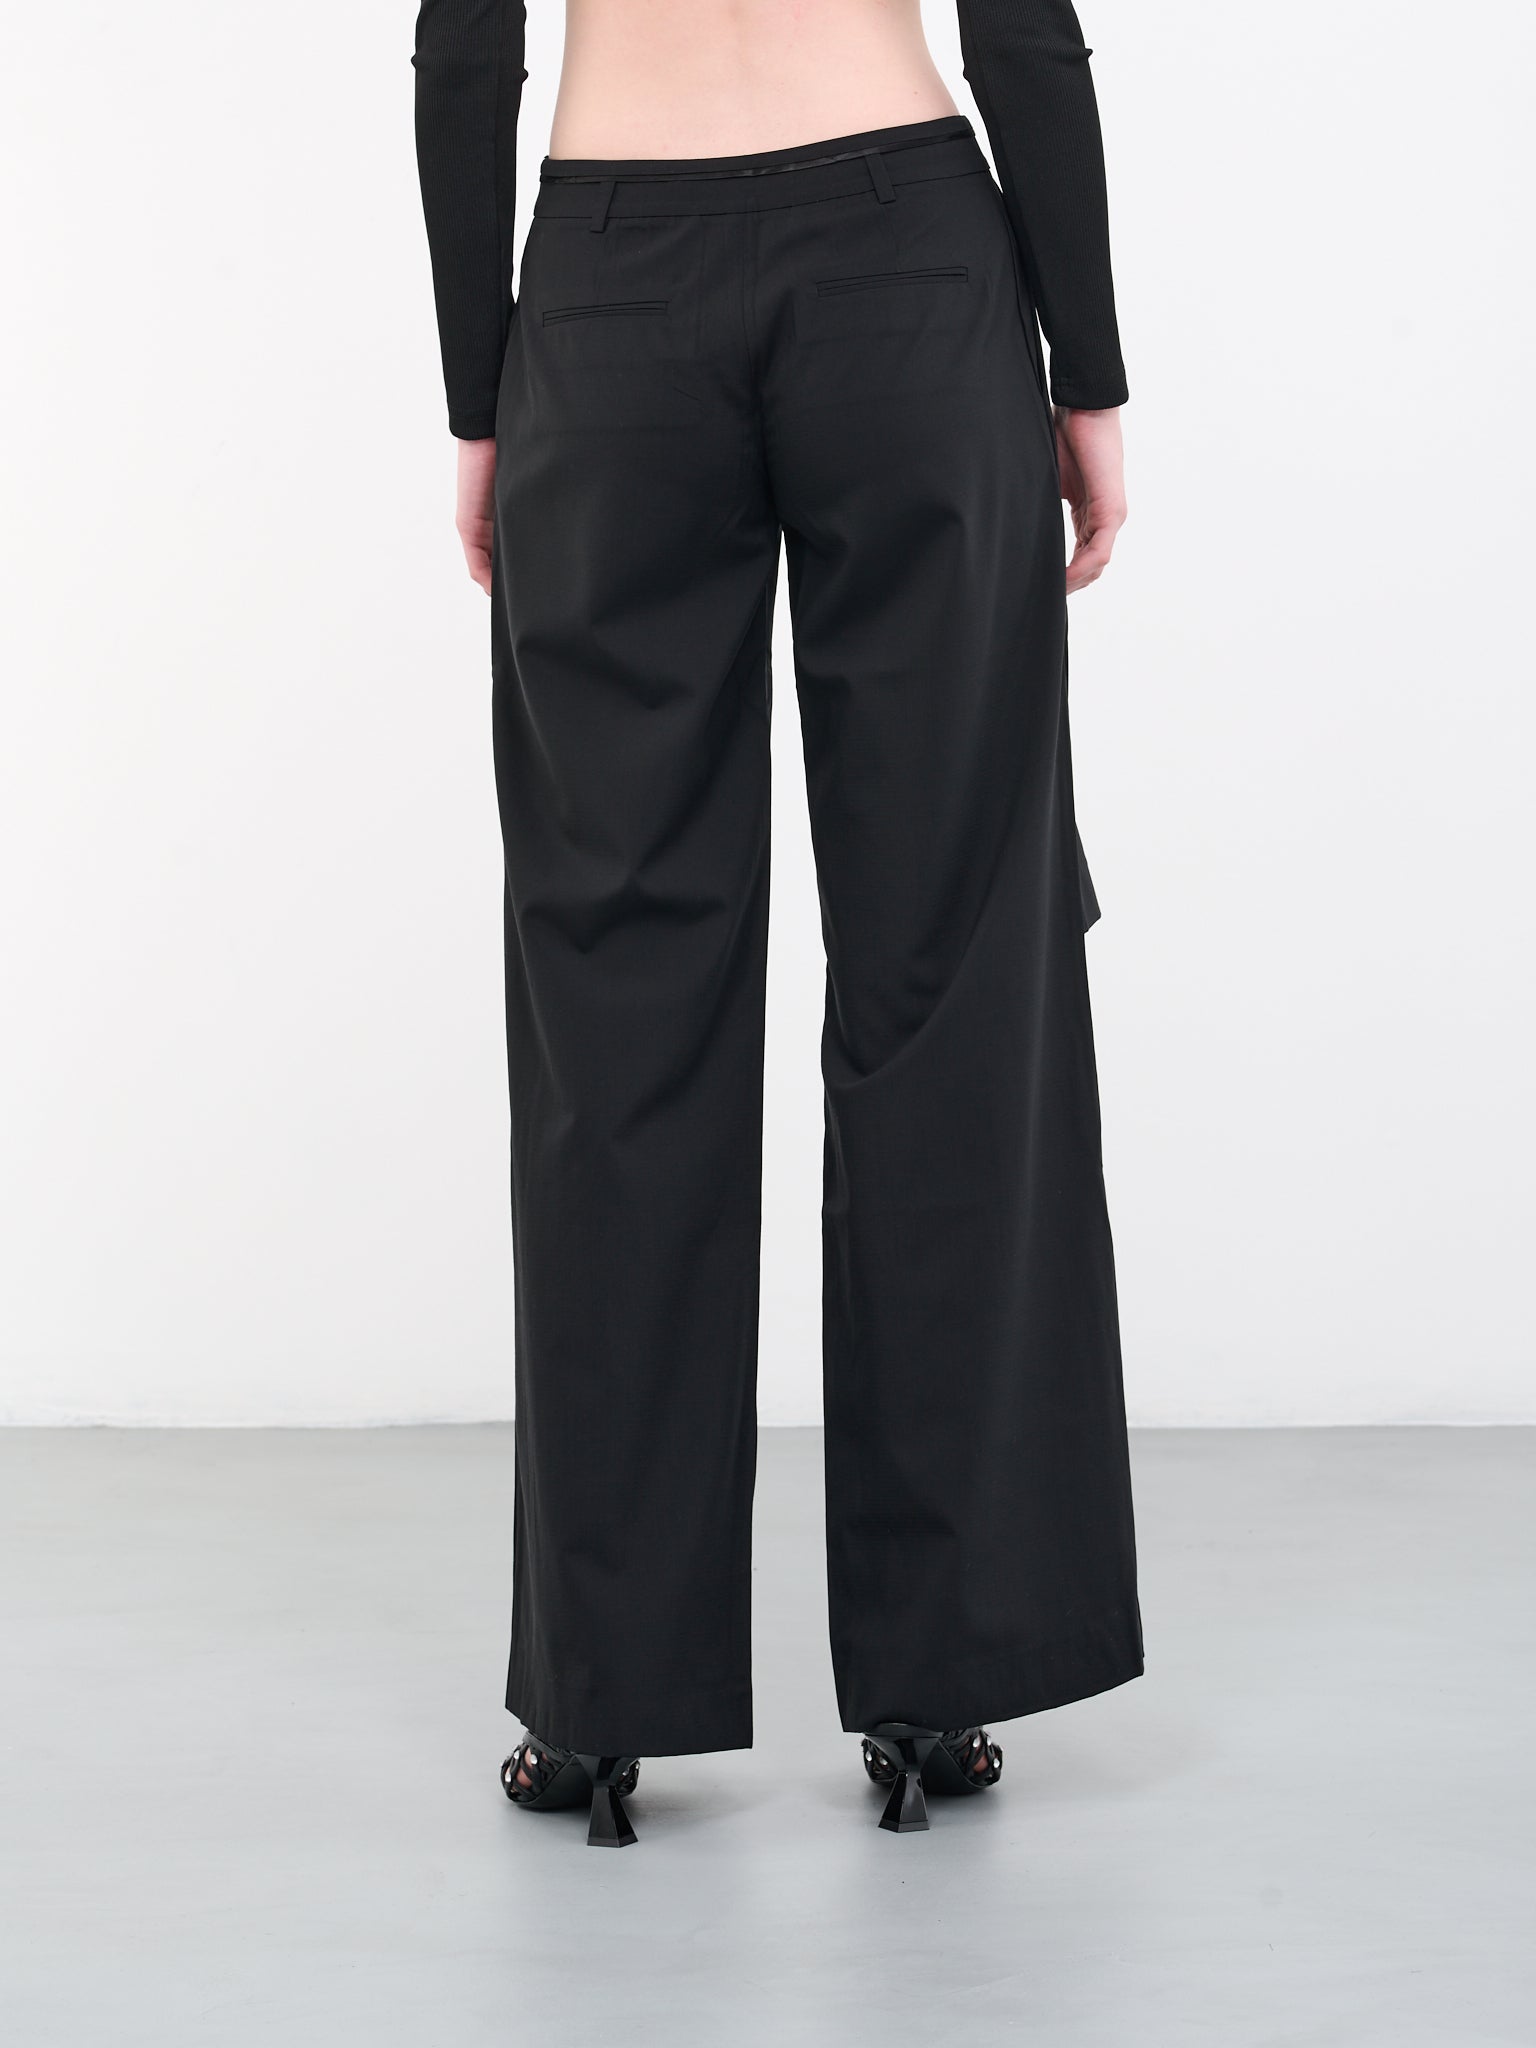 Split Level Trousers (23015002-BLACK)